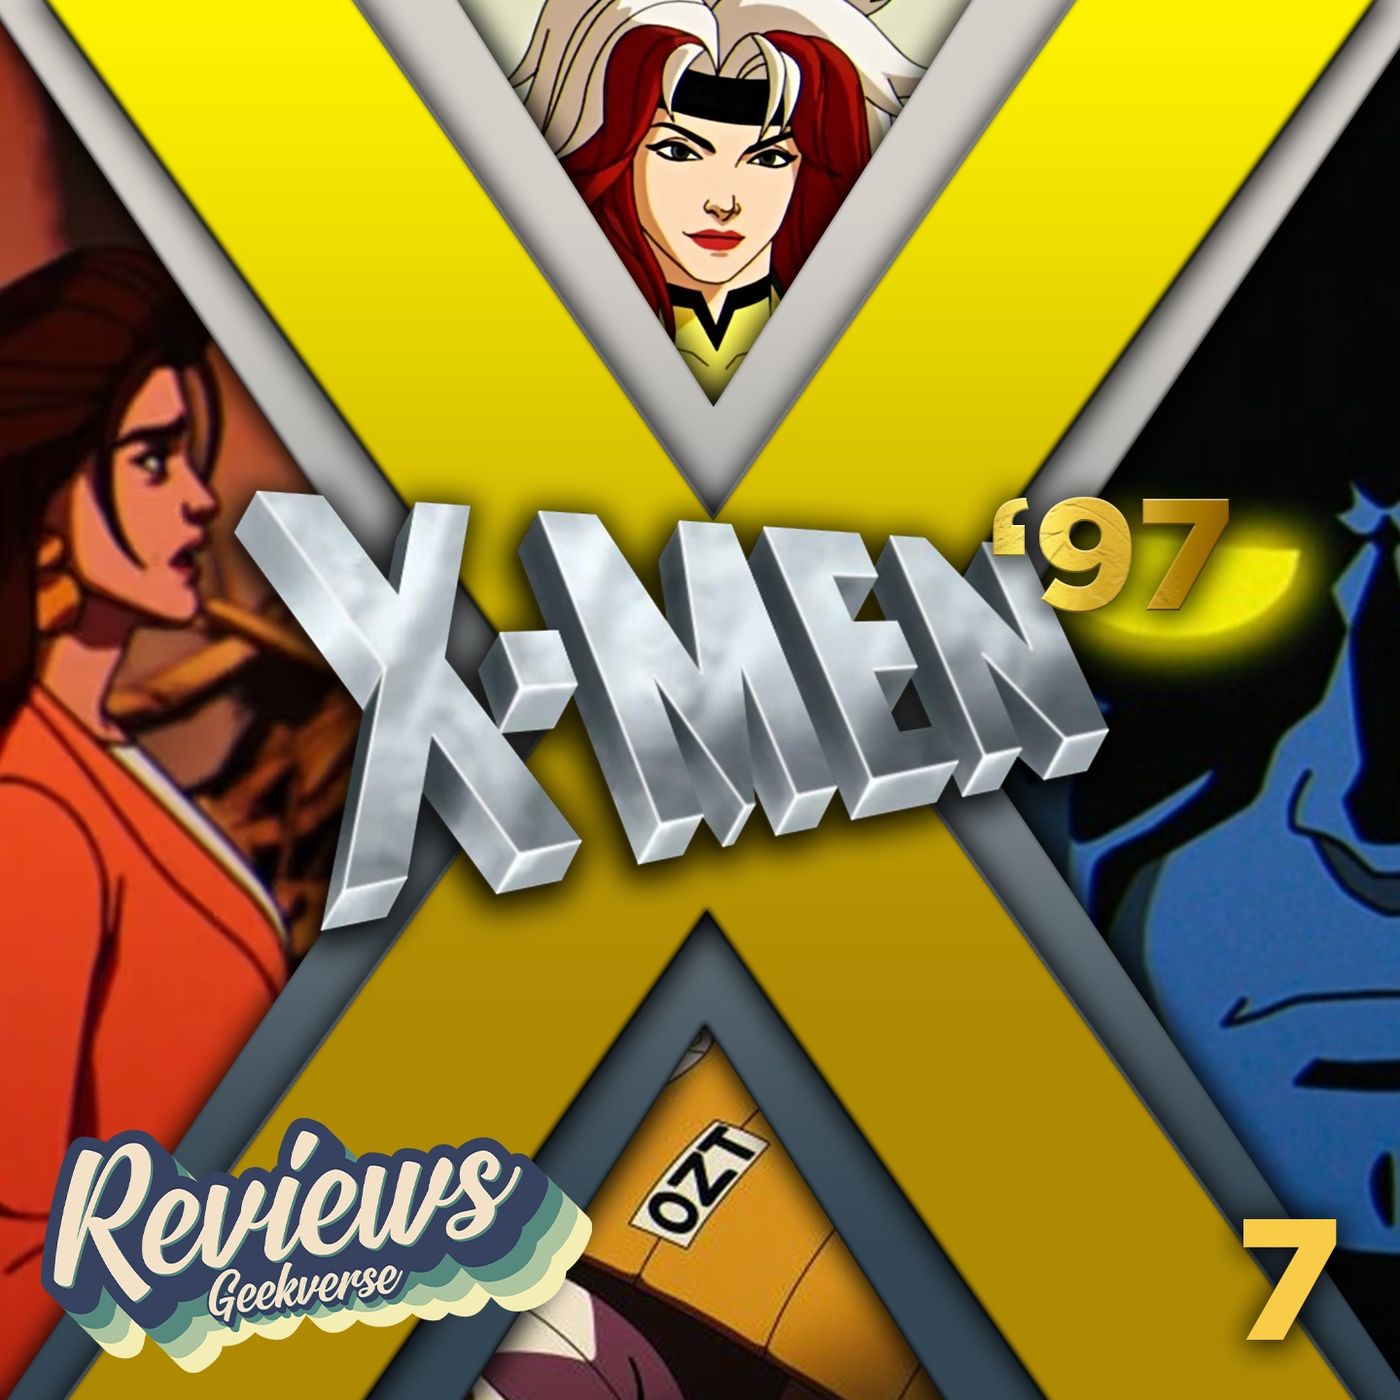 X-Men 97 Episode 7 Spoilers Review